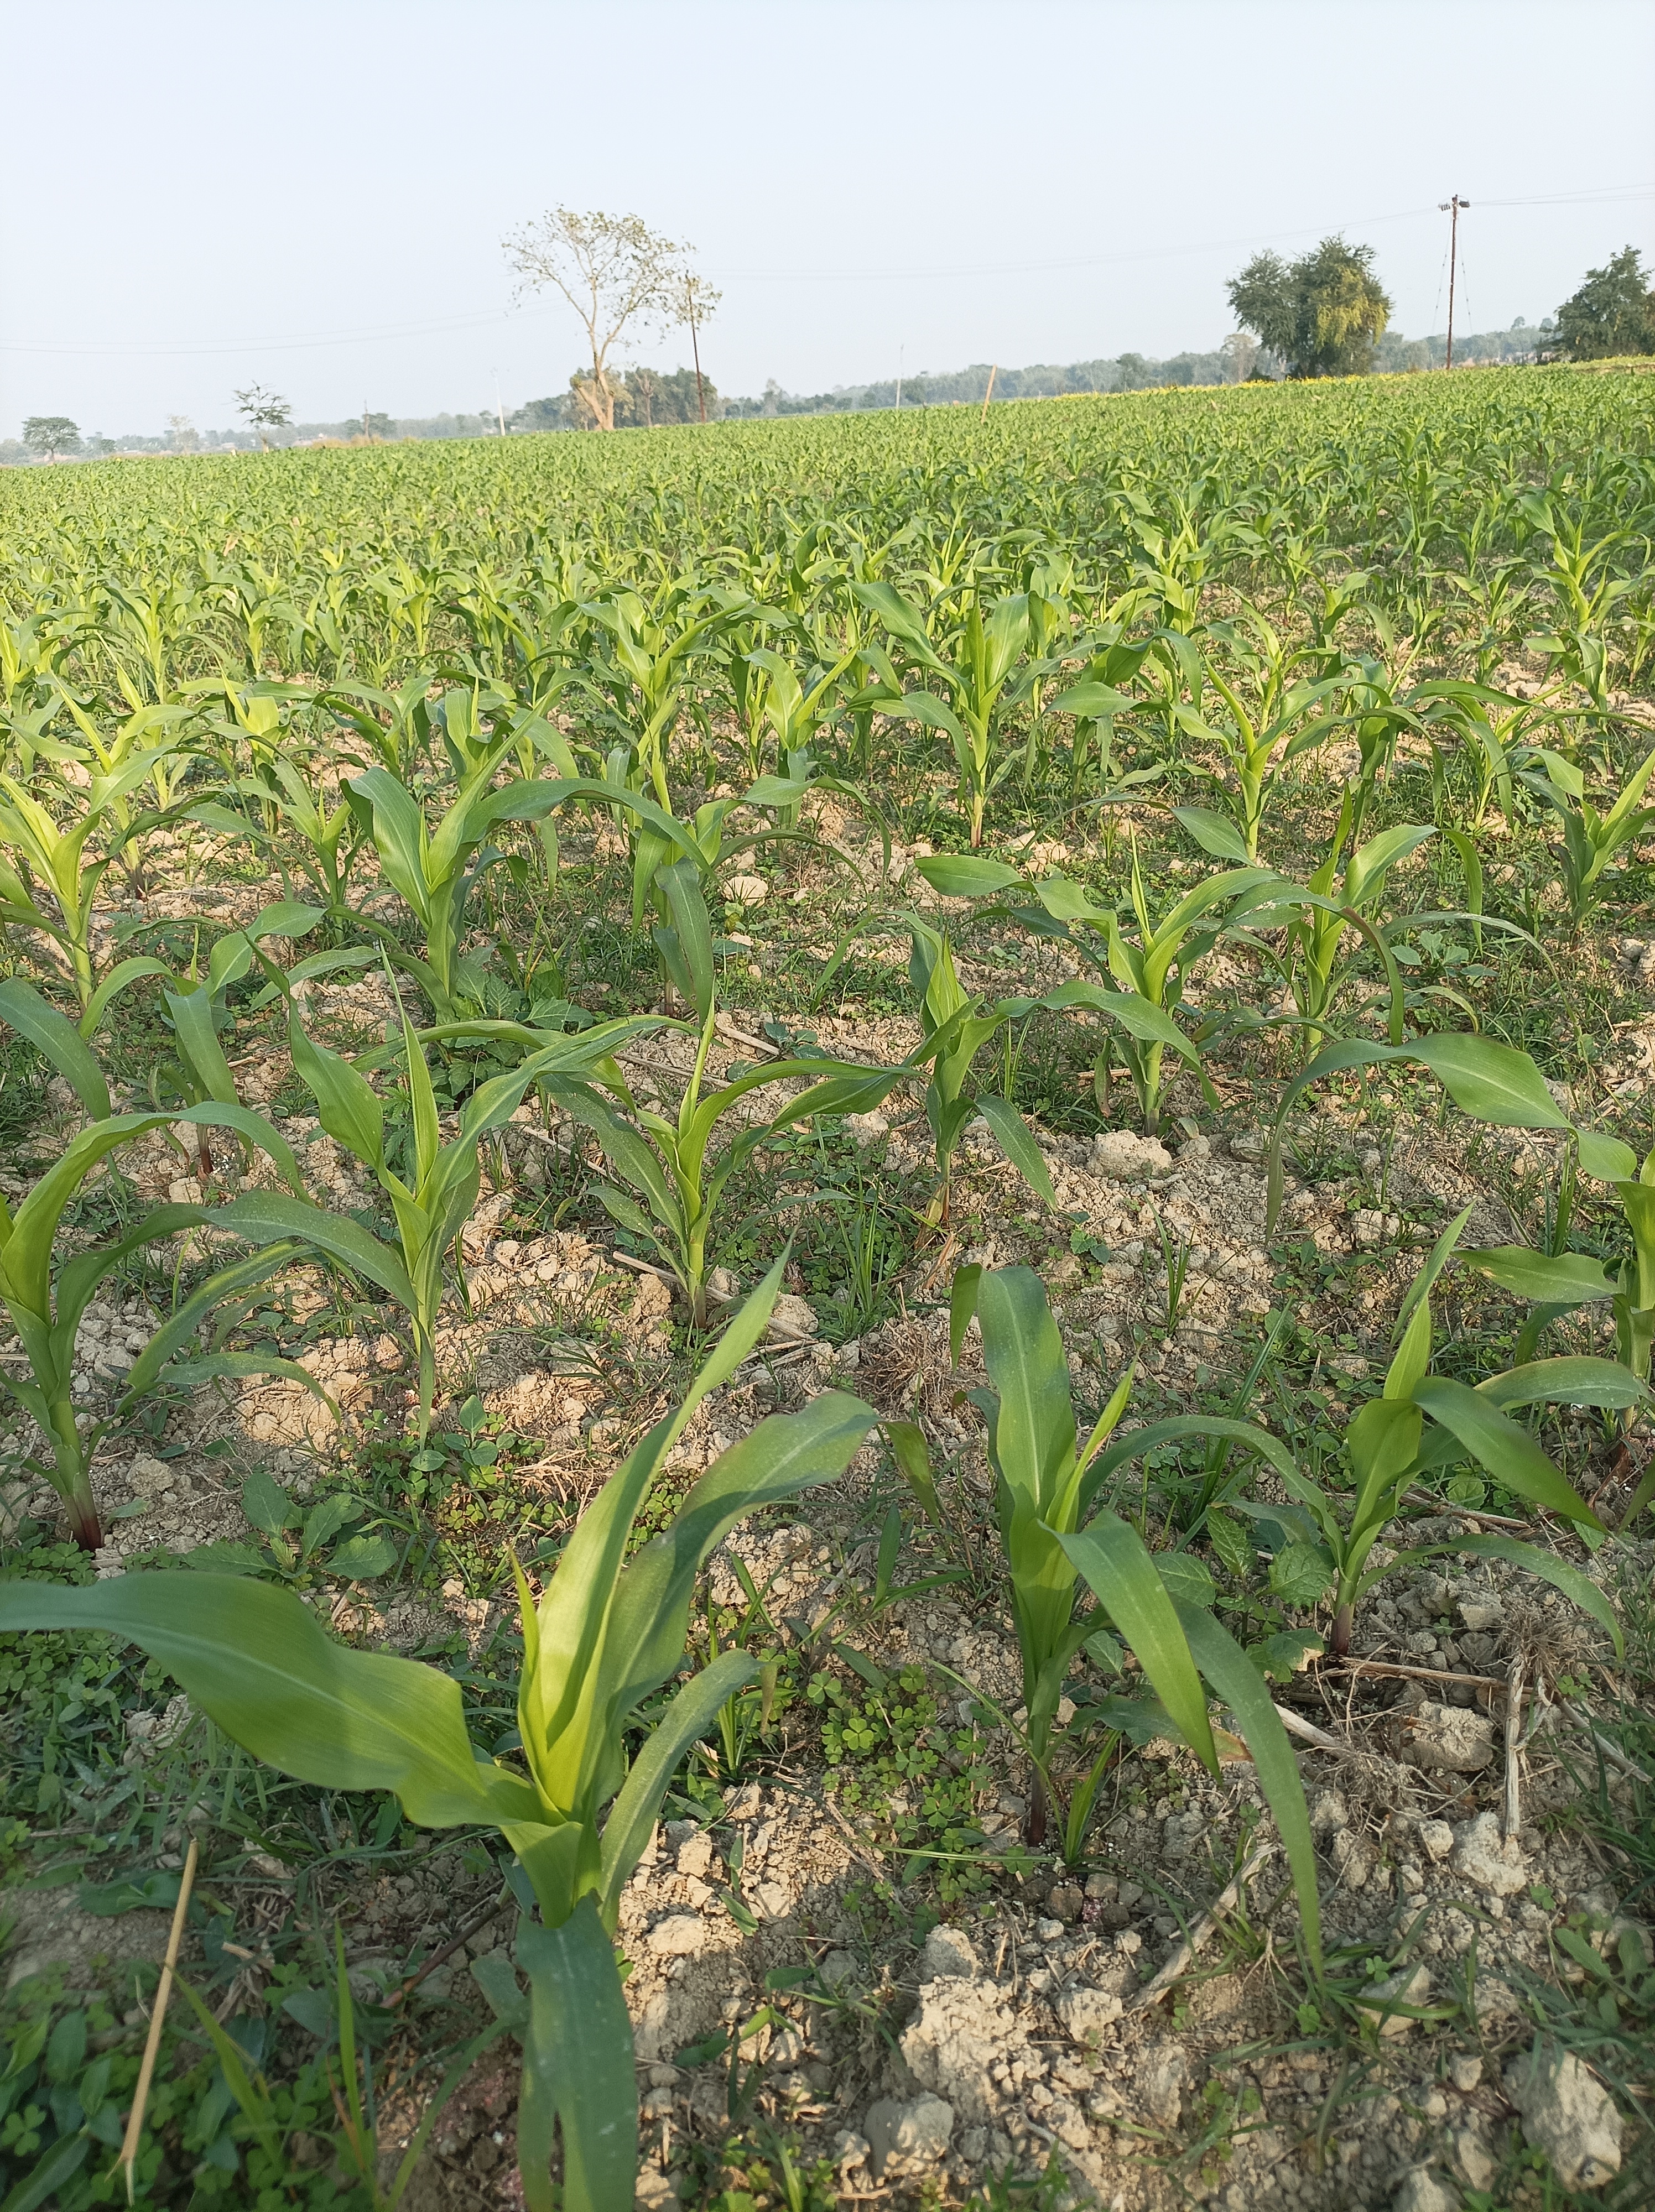 mobile-photography-corn-field-of-maize-blurt